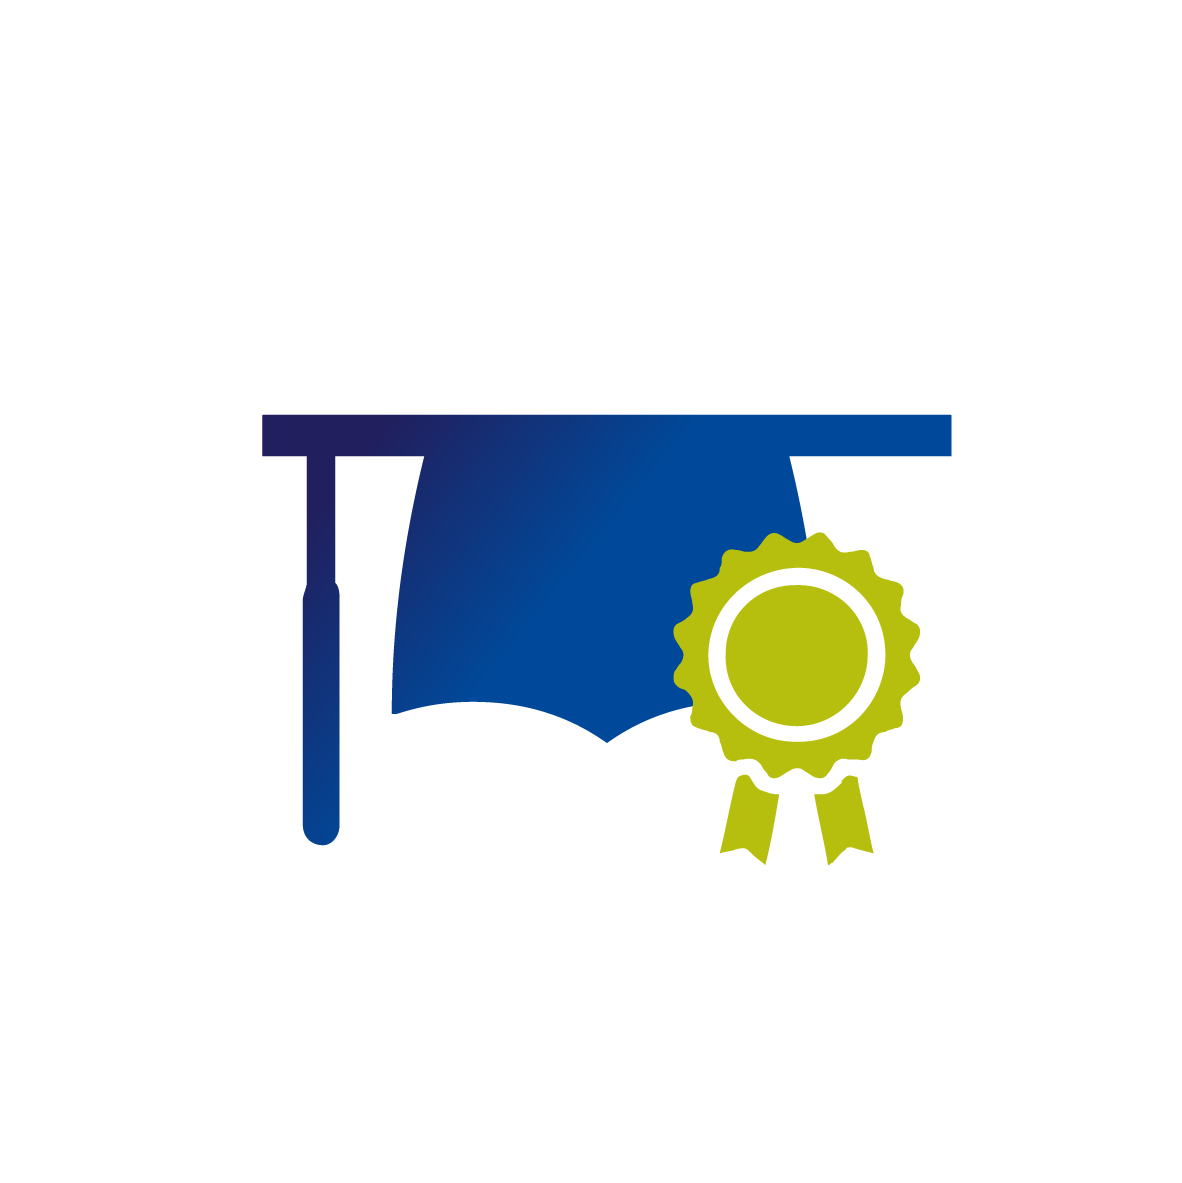 Grad cap with award icon cycle